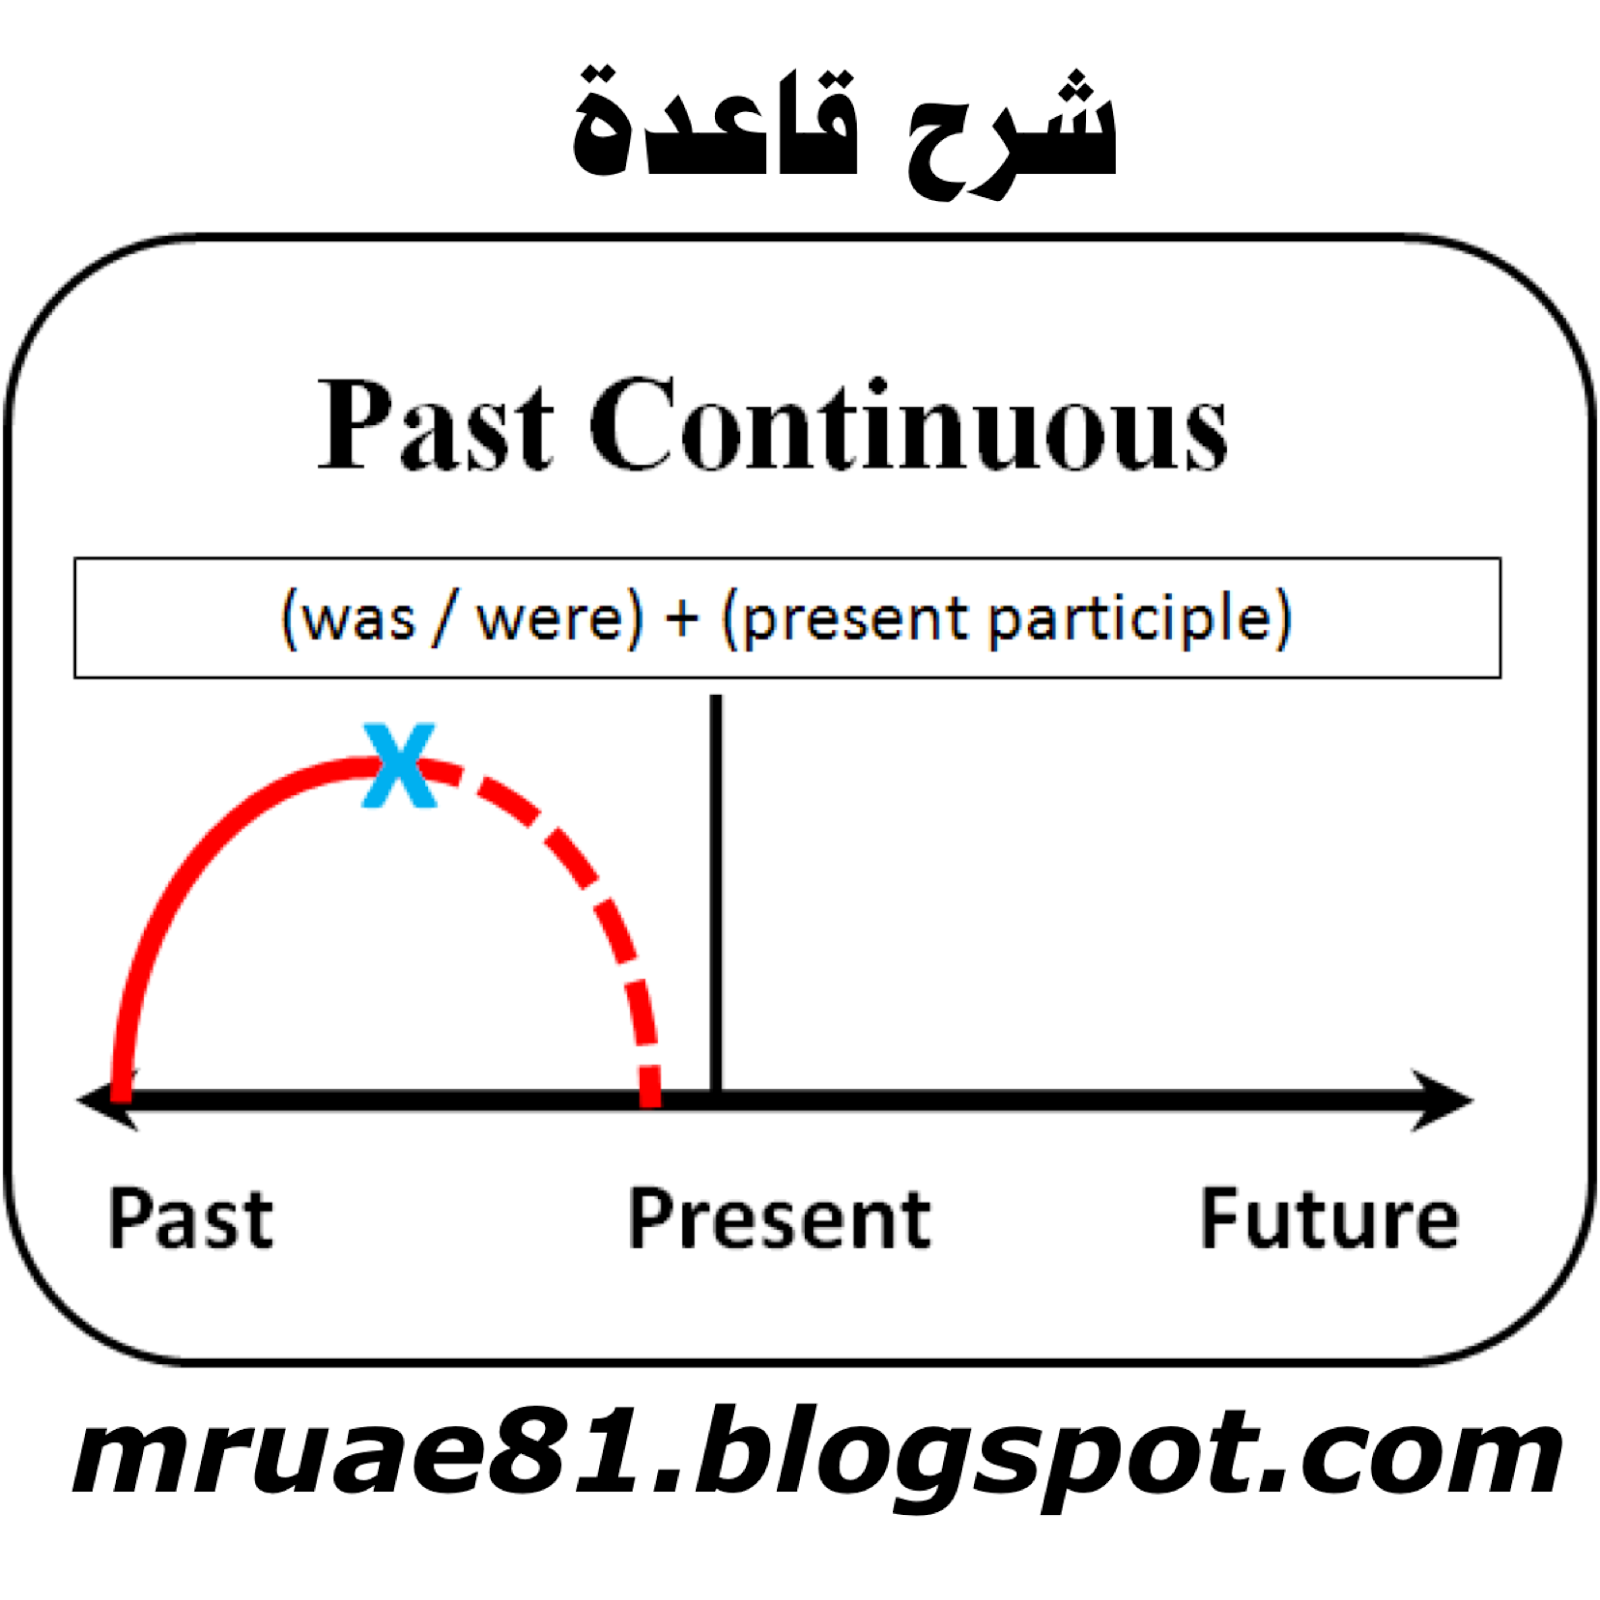 Leave past continuous